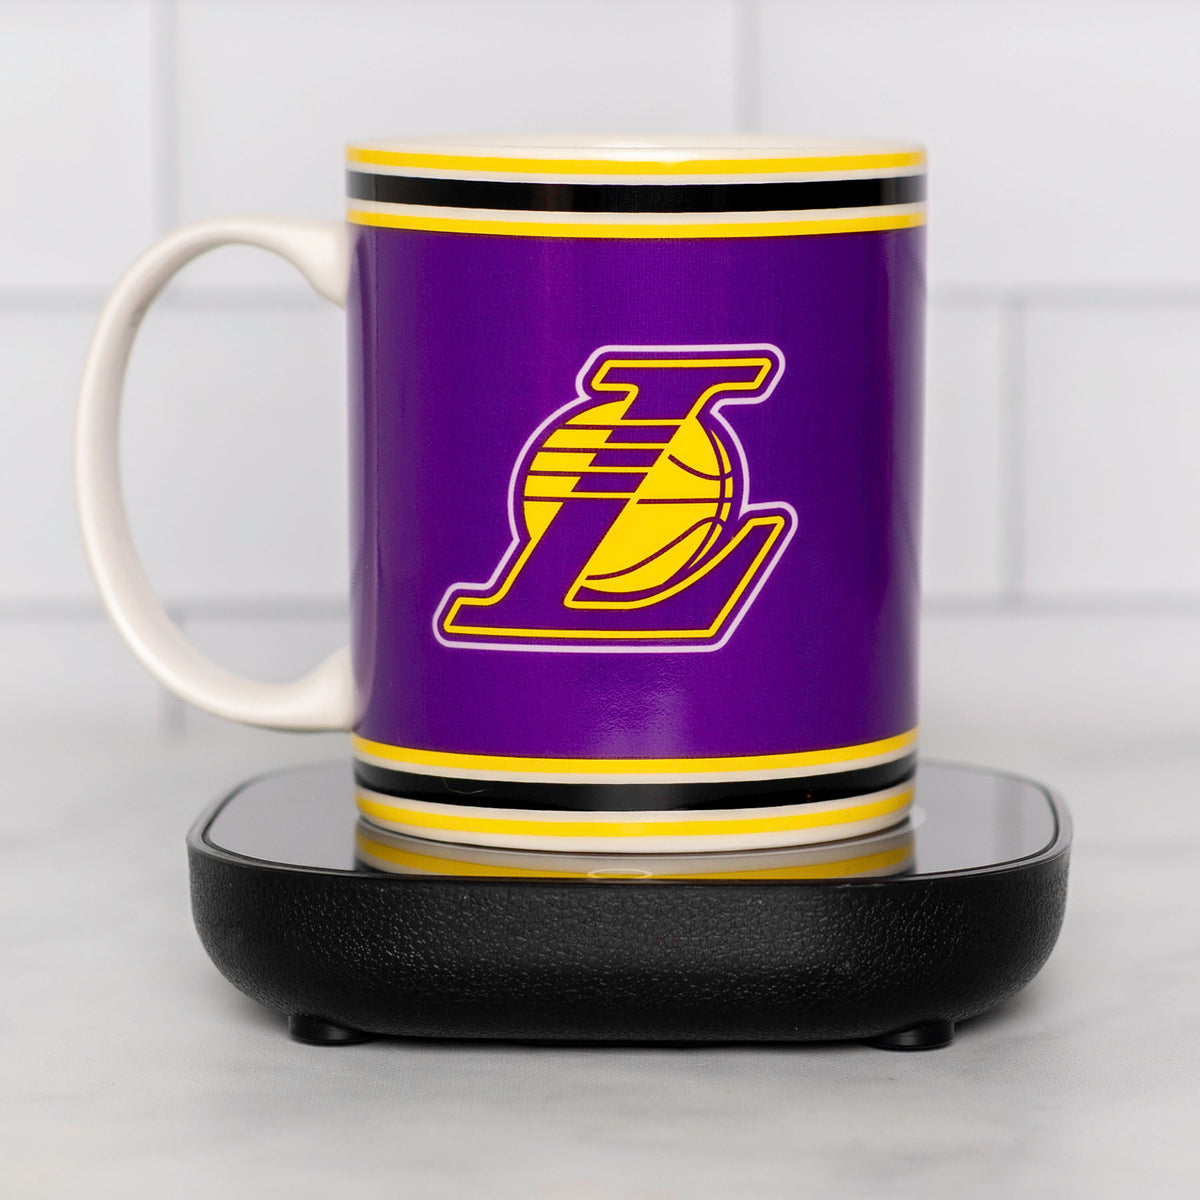 Uncanny Brands Milwaukee Bucks Logo Mug Warmer with Mug